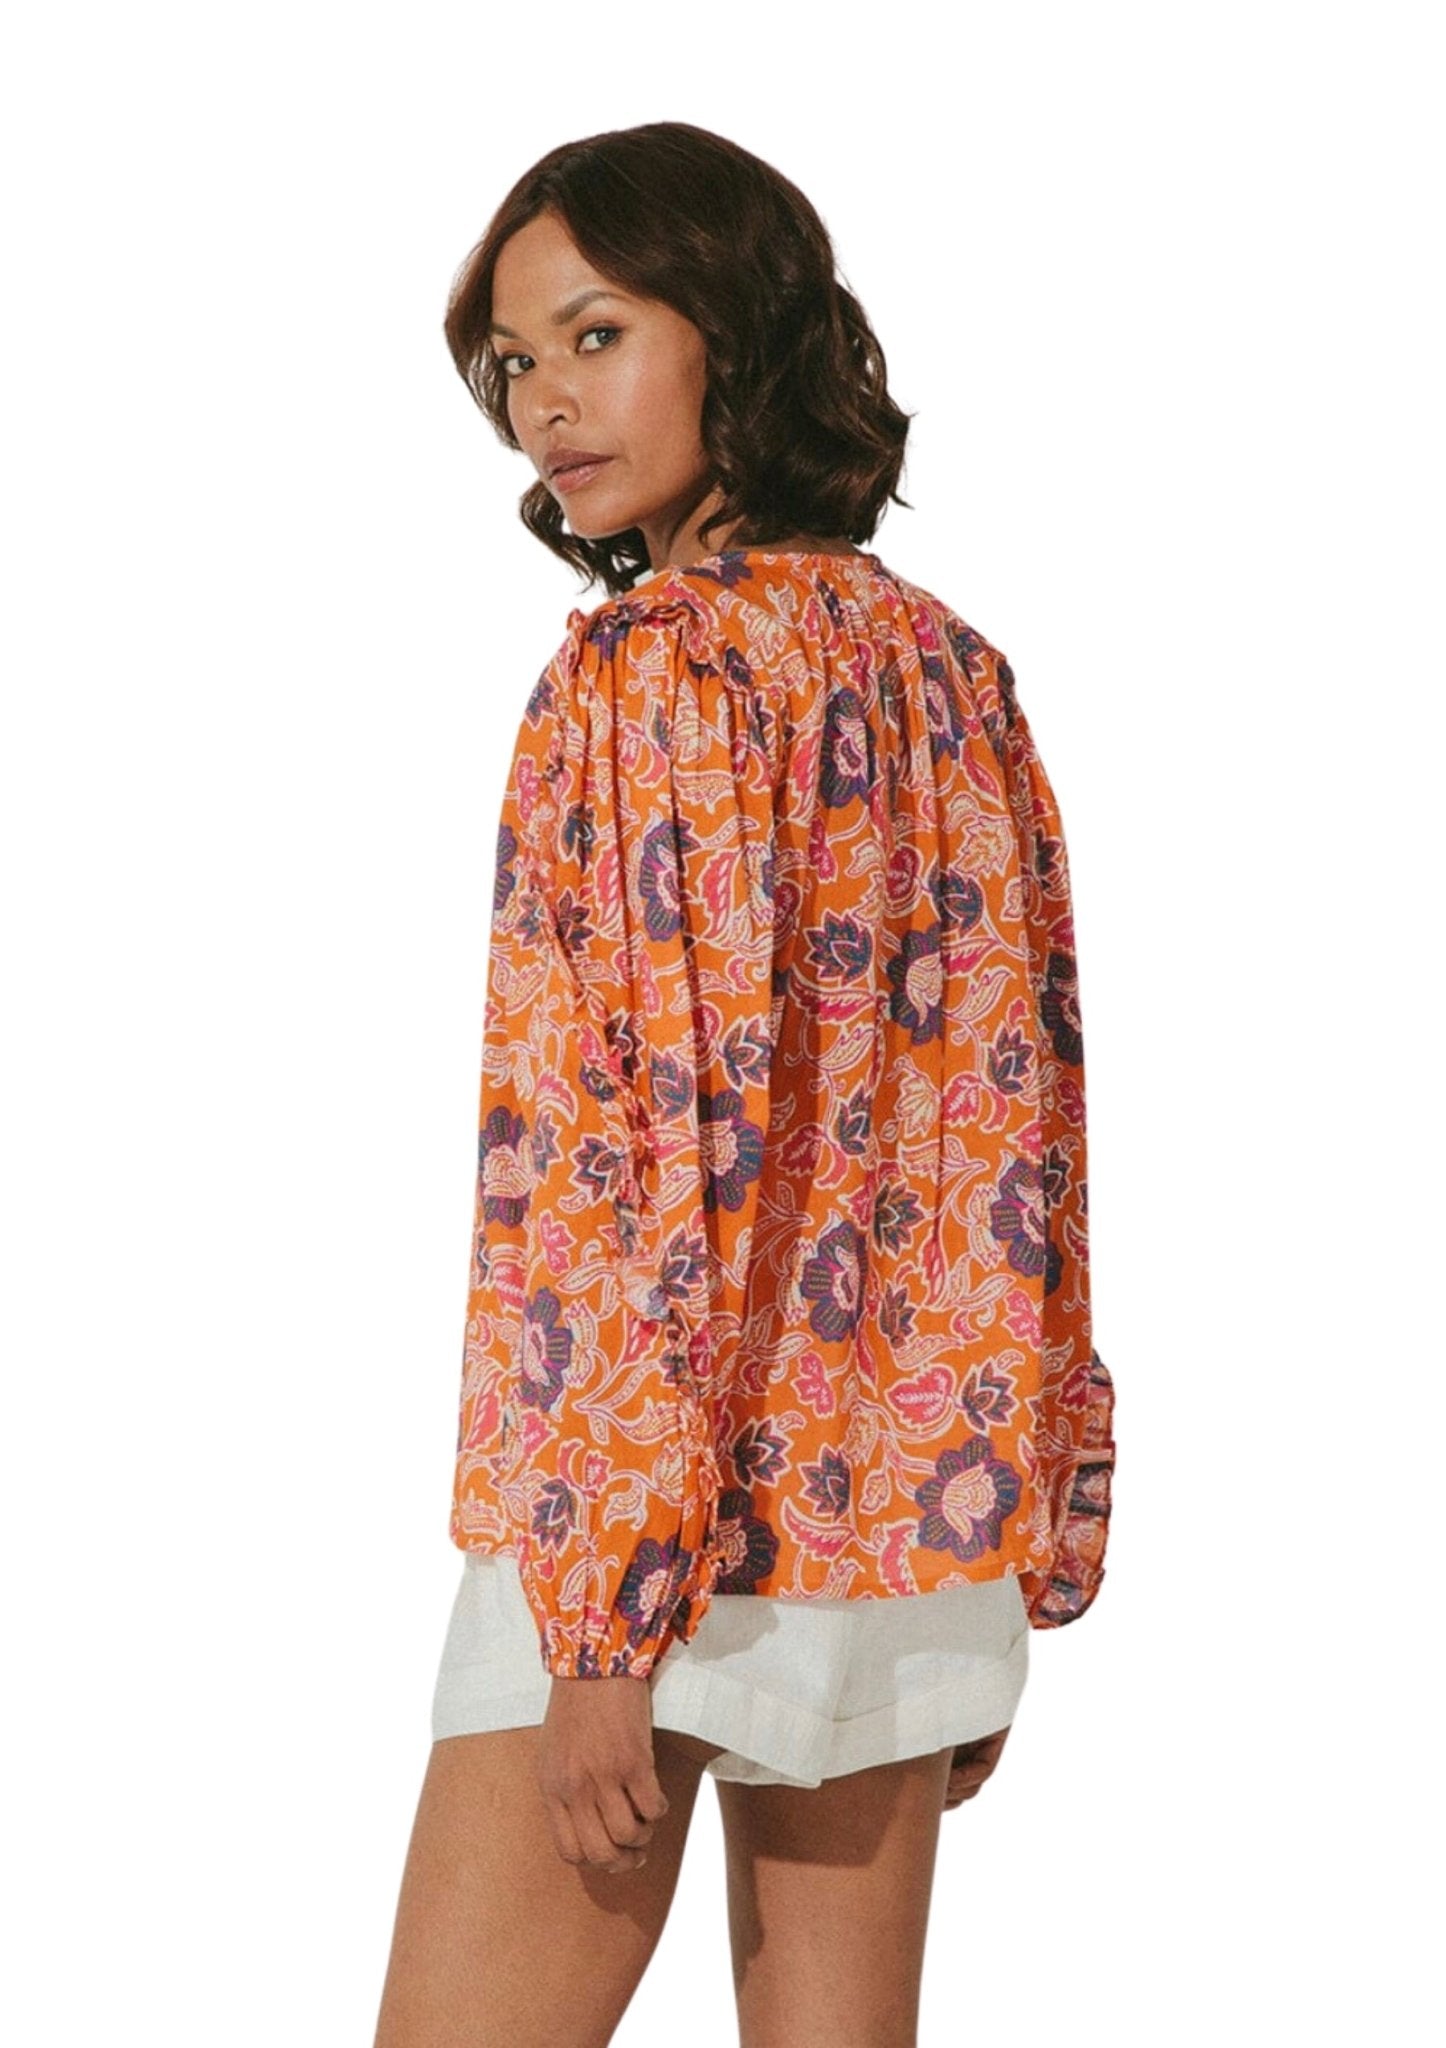 Cleobella-talia-button-front-blouse-tropique-tops-blouse-georgia-kate